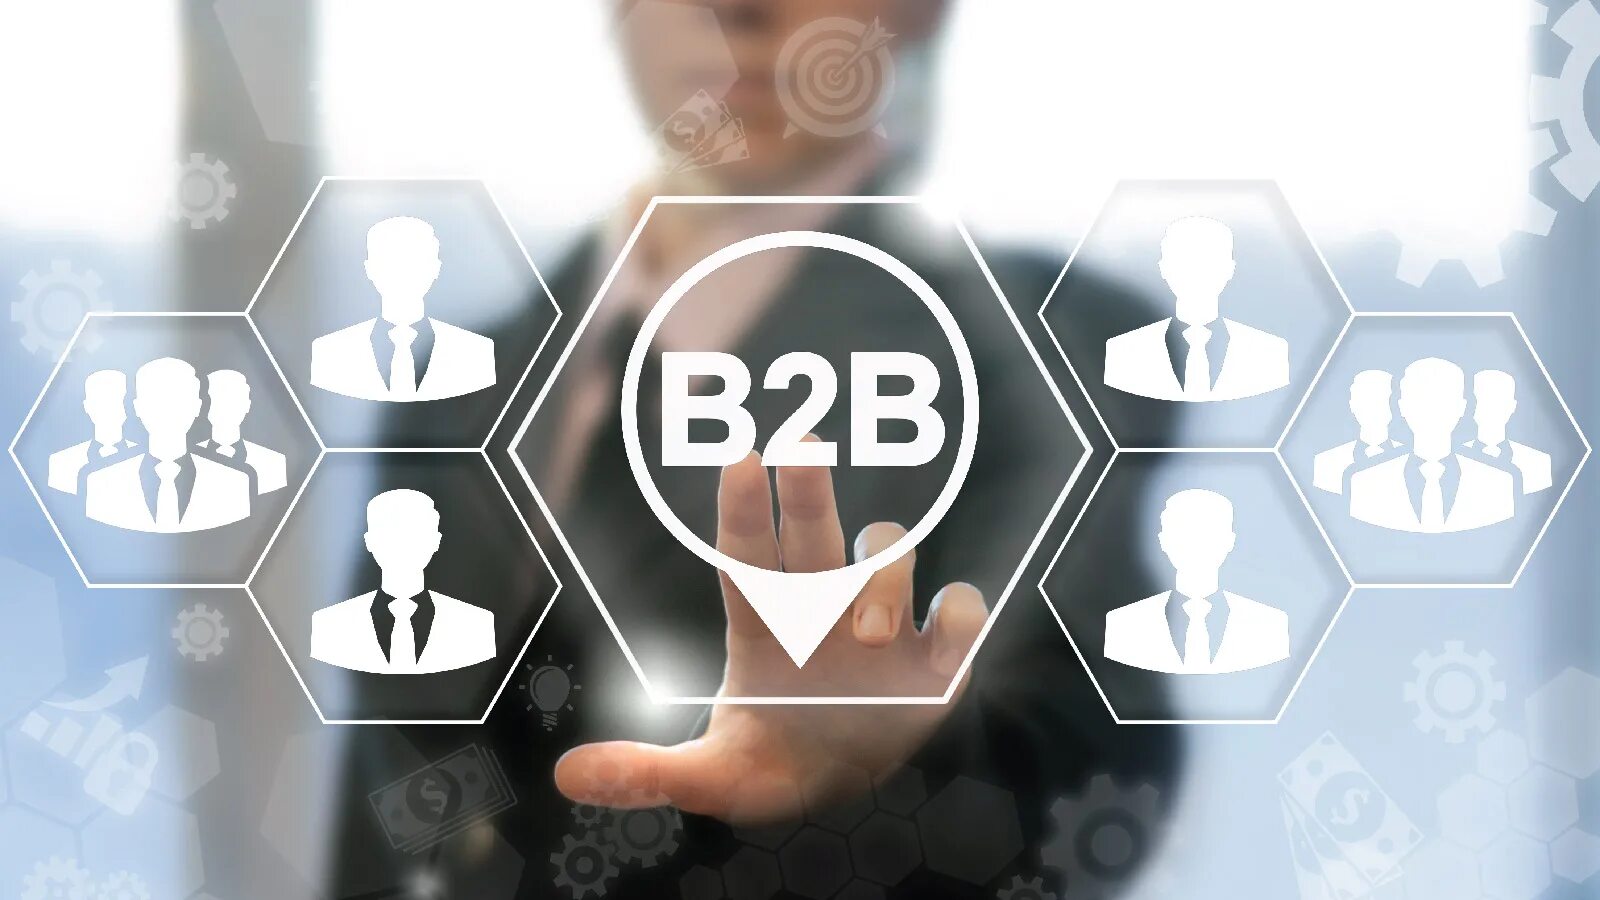 B2b бизнес. B2b маркетинг. Бизнес для бизнеса b2b. B2b картинка. Сбыт менеджмент